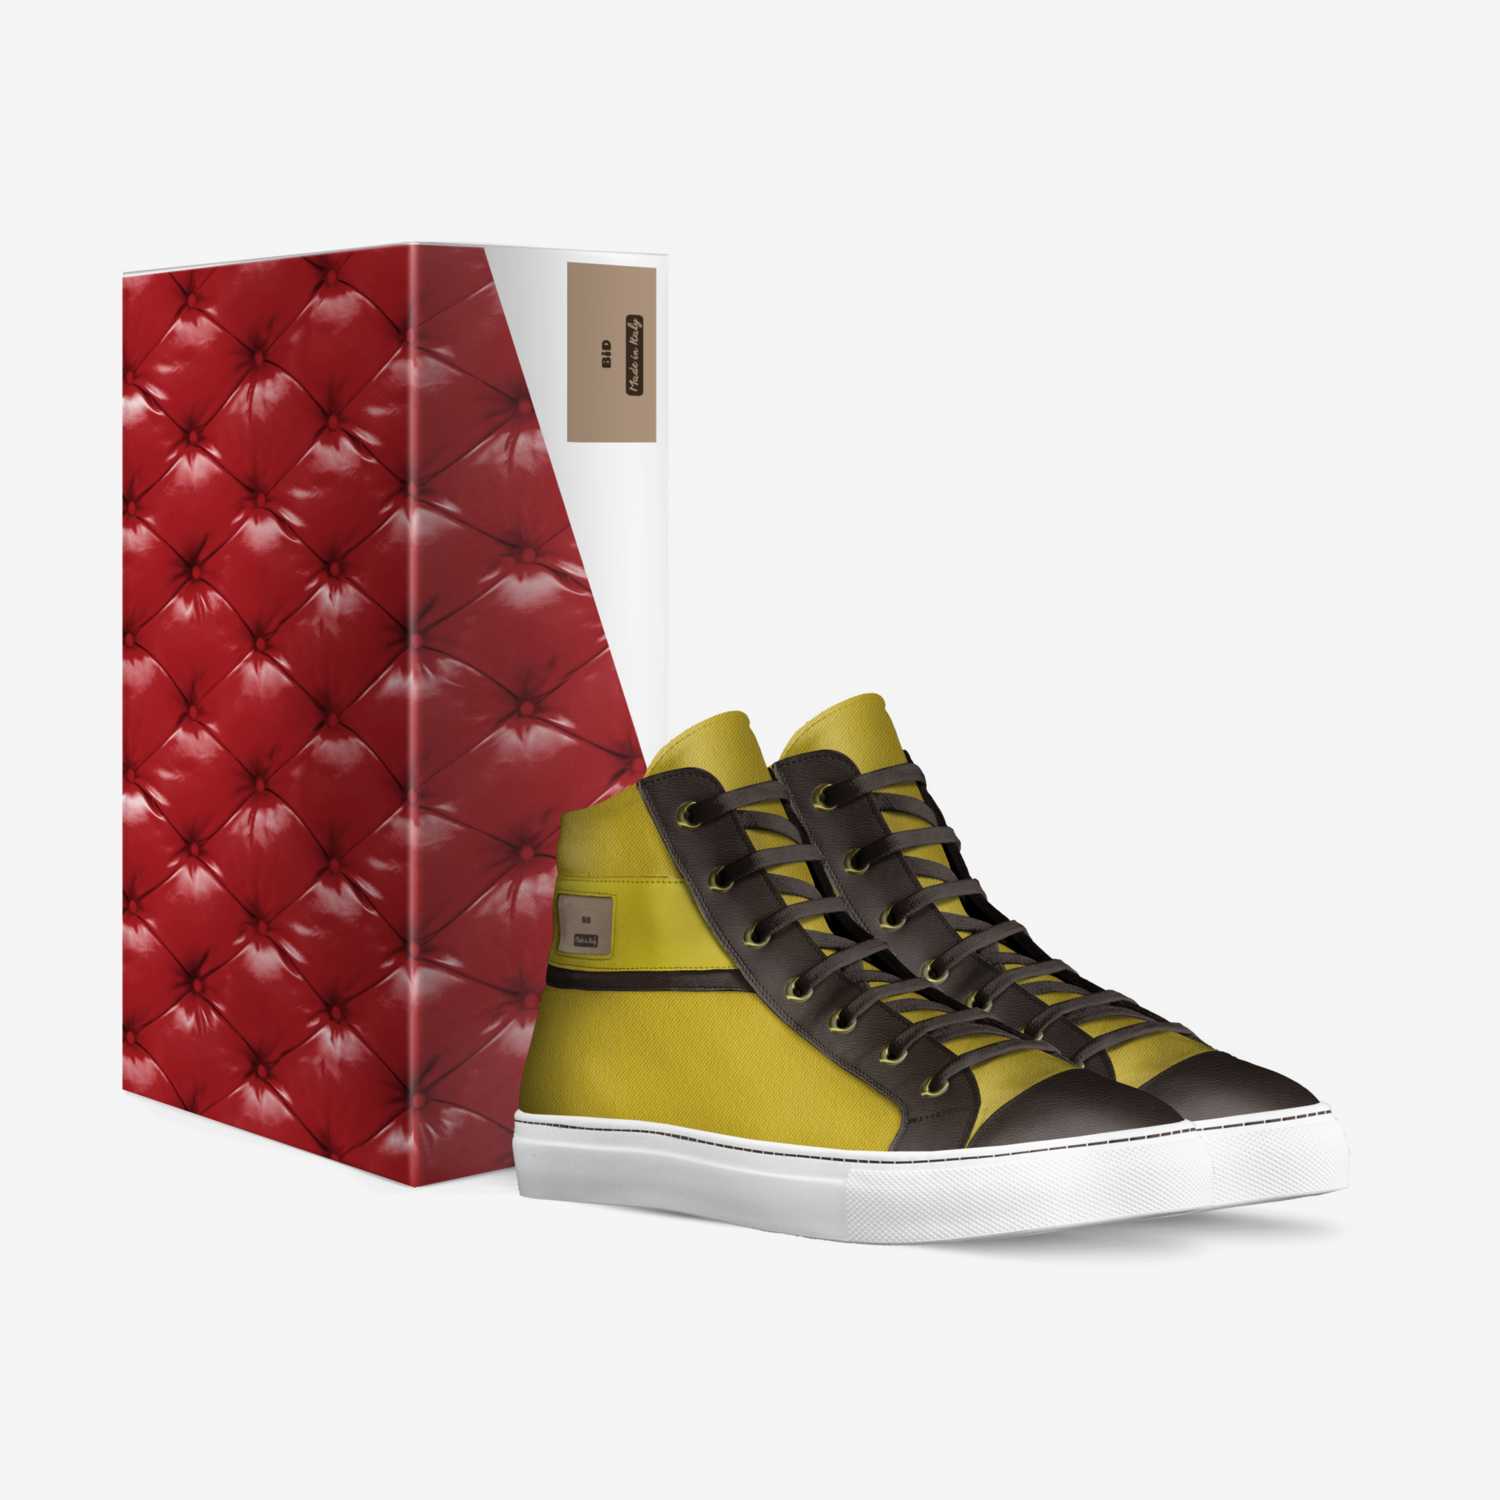 BiD custom made in Italy shoes by Allyn Antoine | Box view